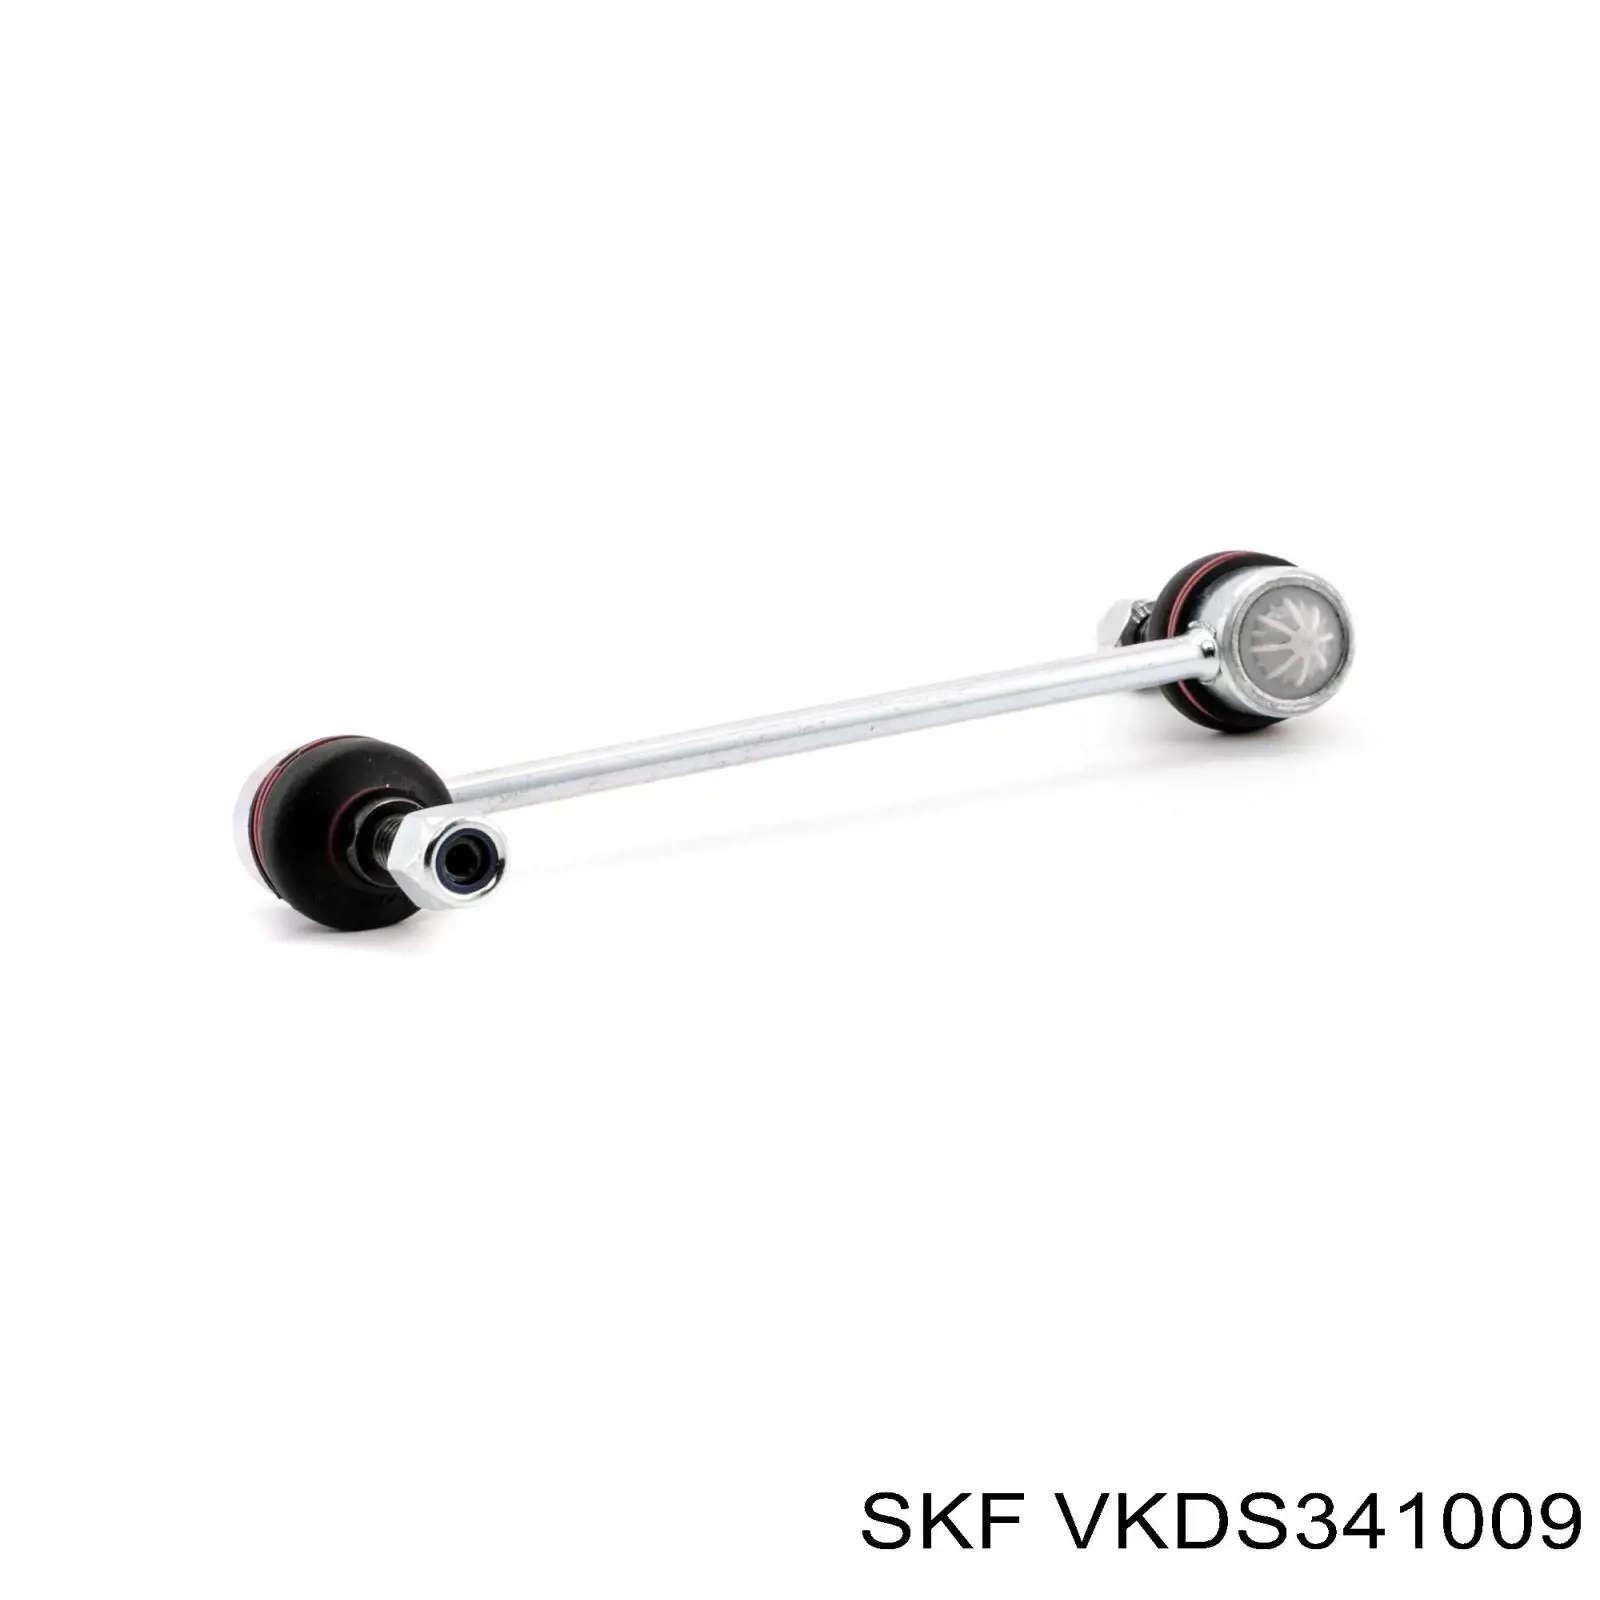 VKDS 341009 SKF soporte de barra estabilizadora delantera